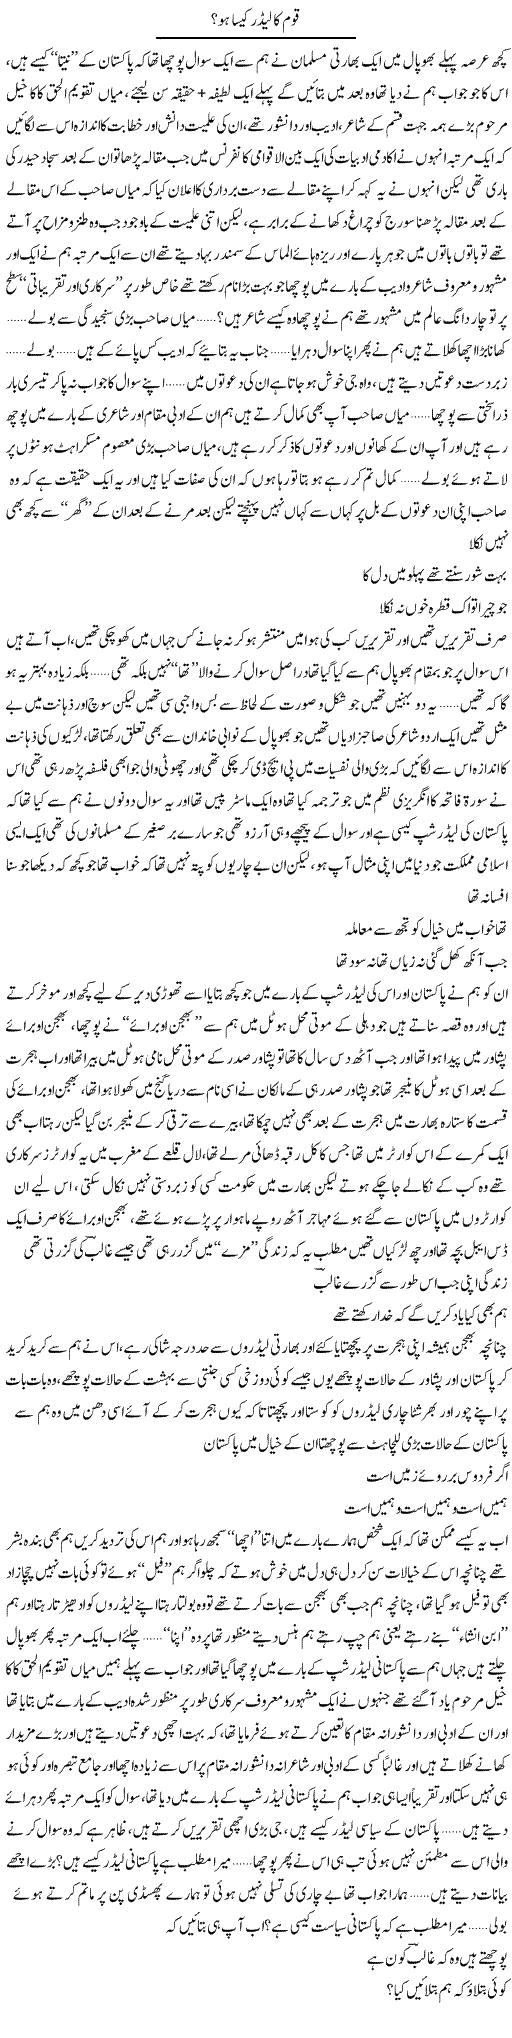 Qoum Ka Leader Kesa Ho? | Saad Ullah Jan Barq | Daily Urdu Columns